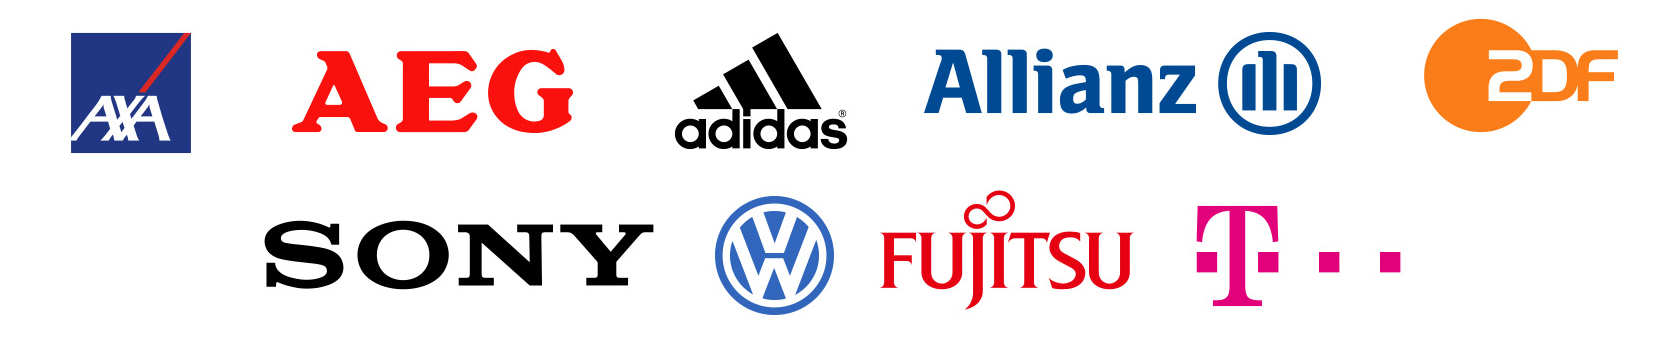 Logos der GFU Kunden